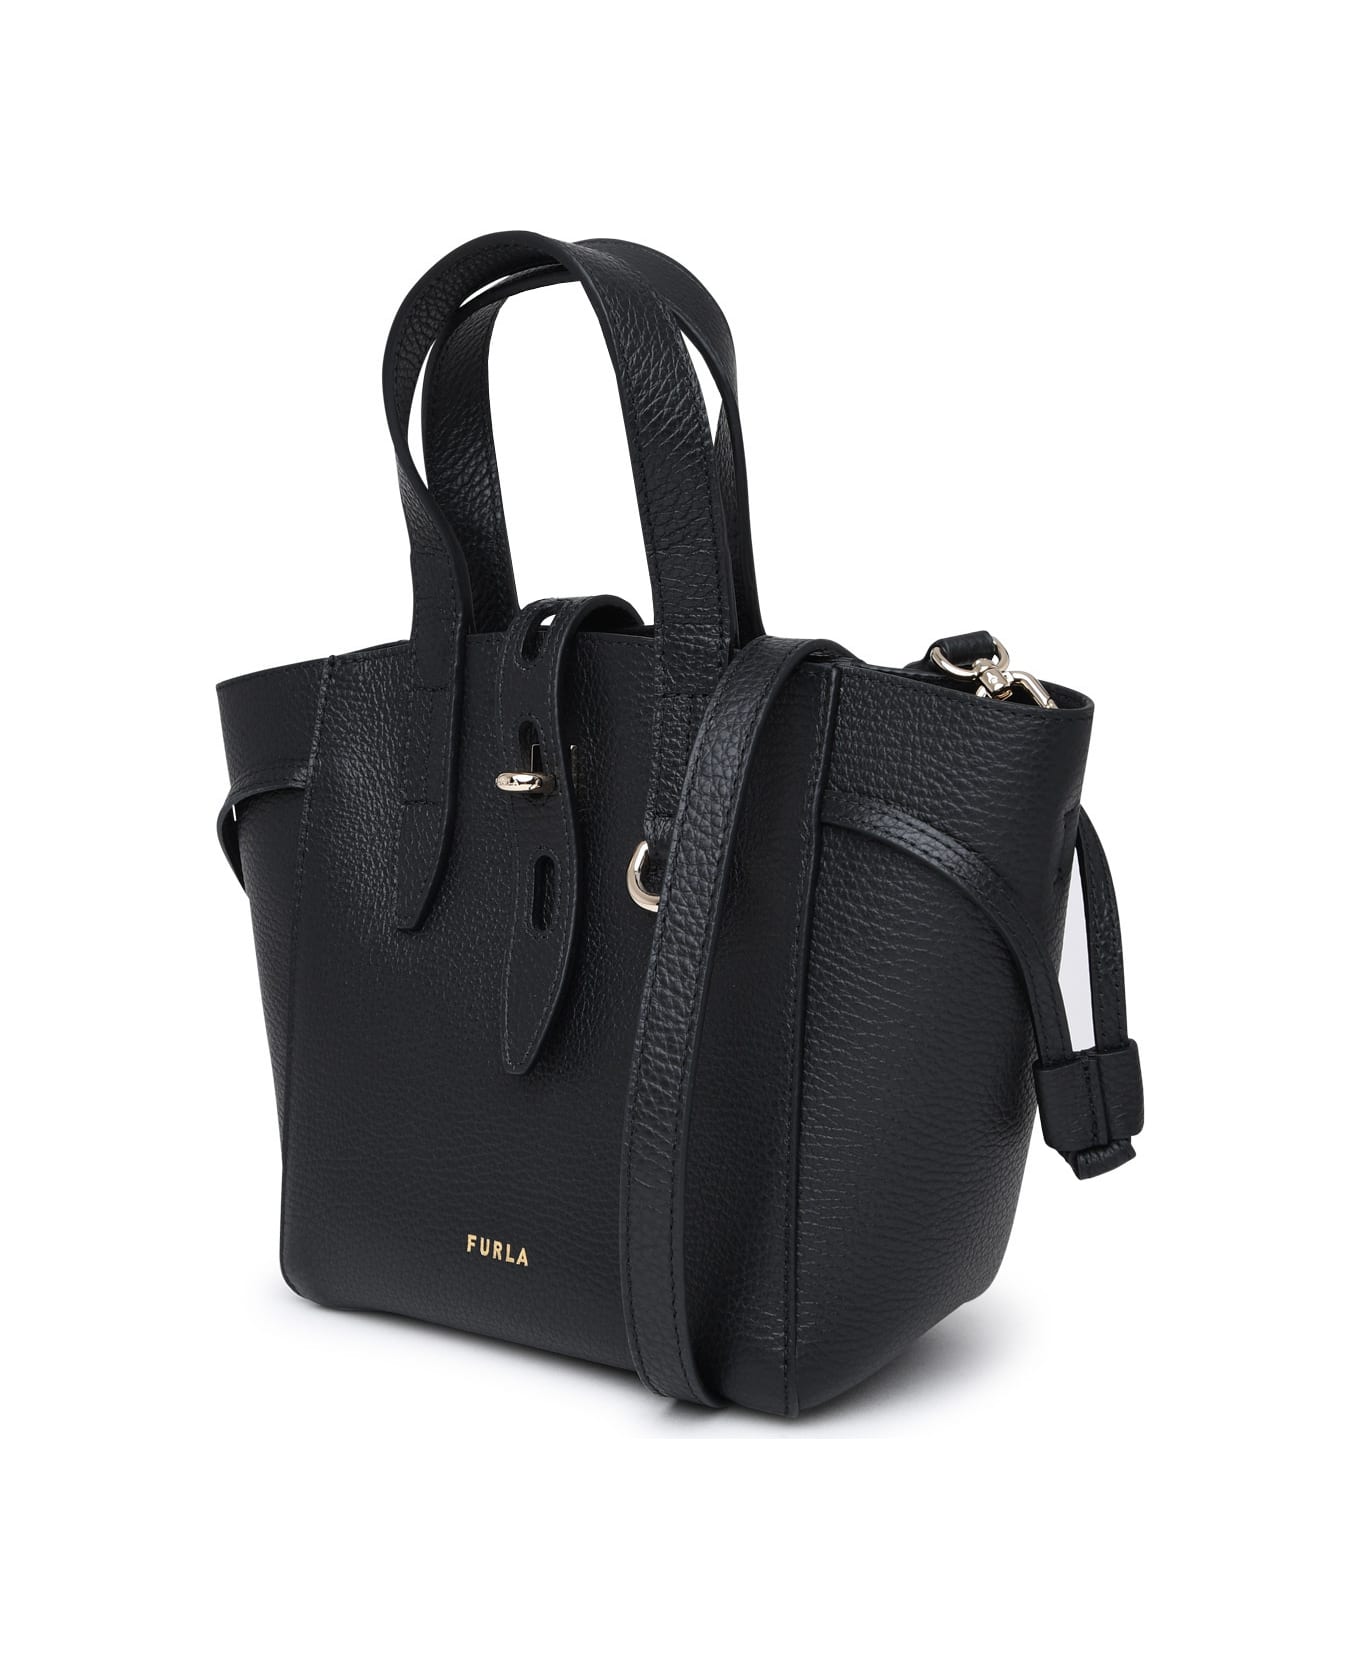 Furla Black Leather Net Mini Tote Bag - Nero トートバッグ